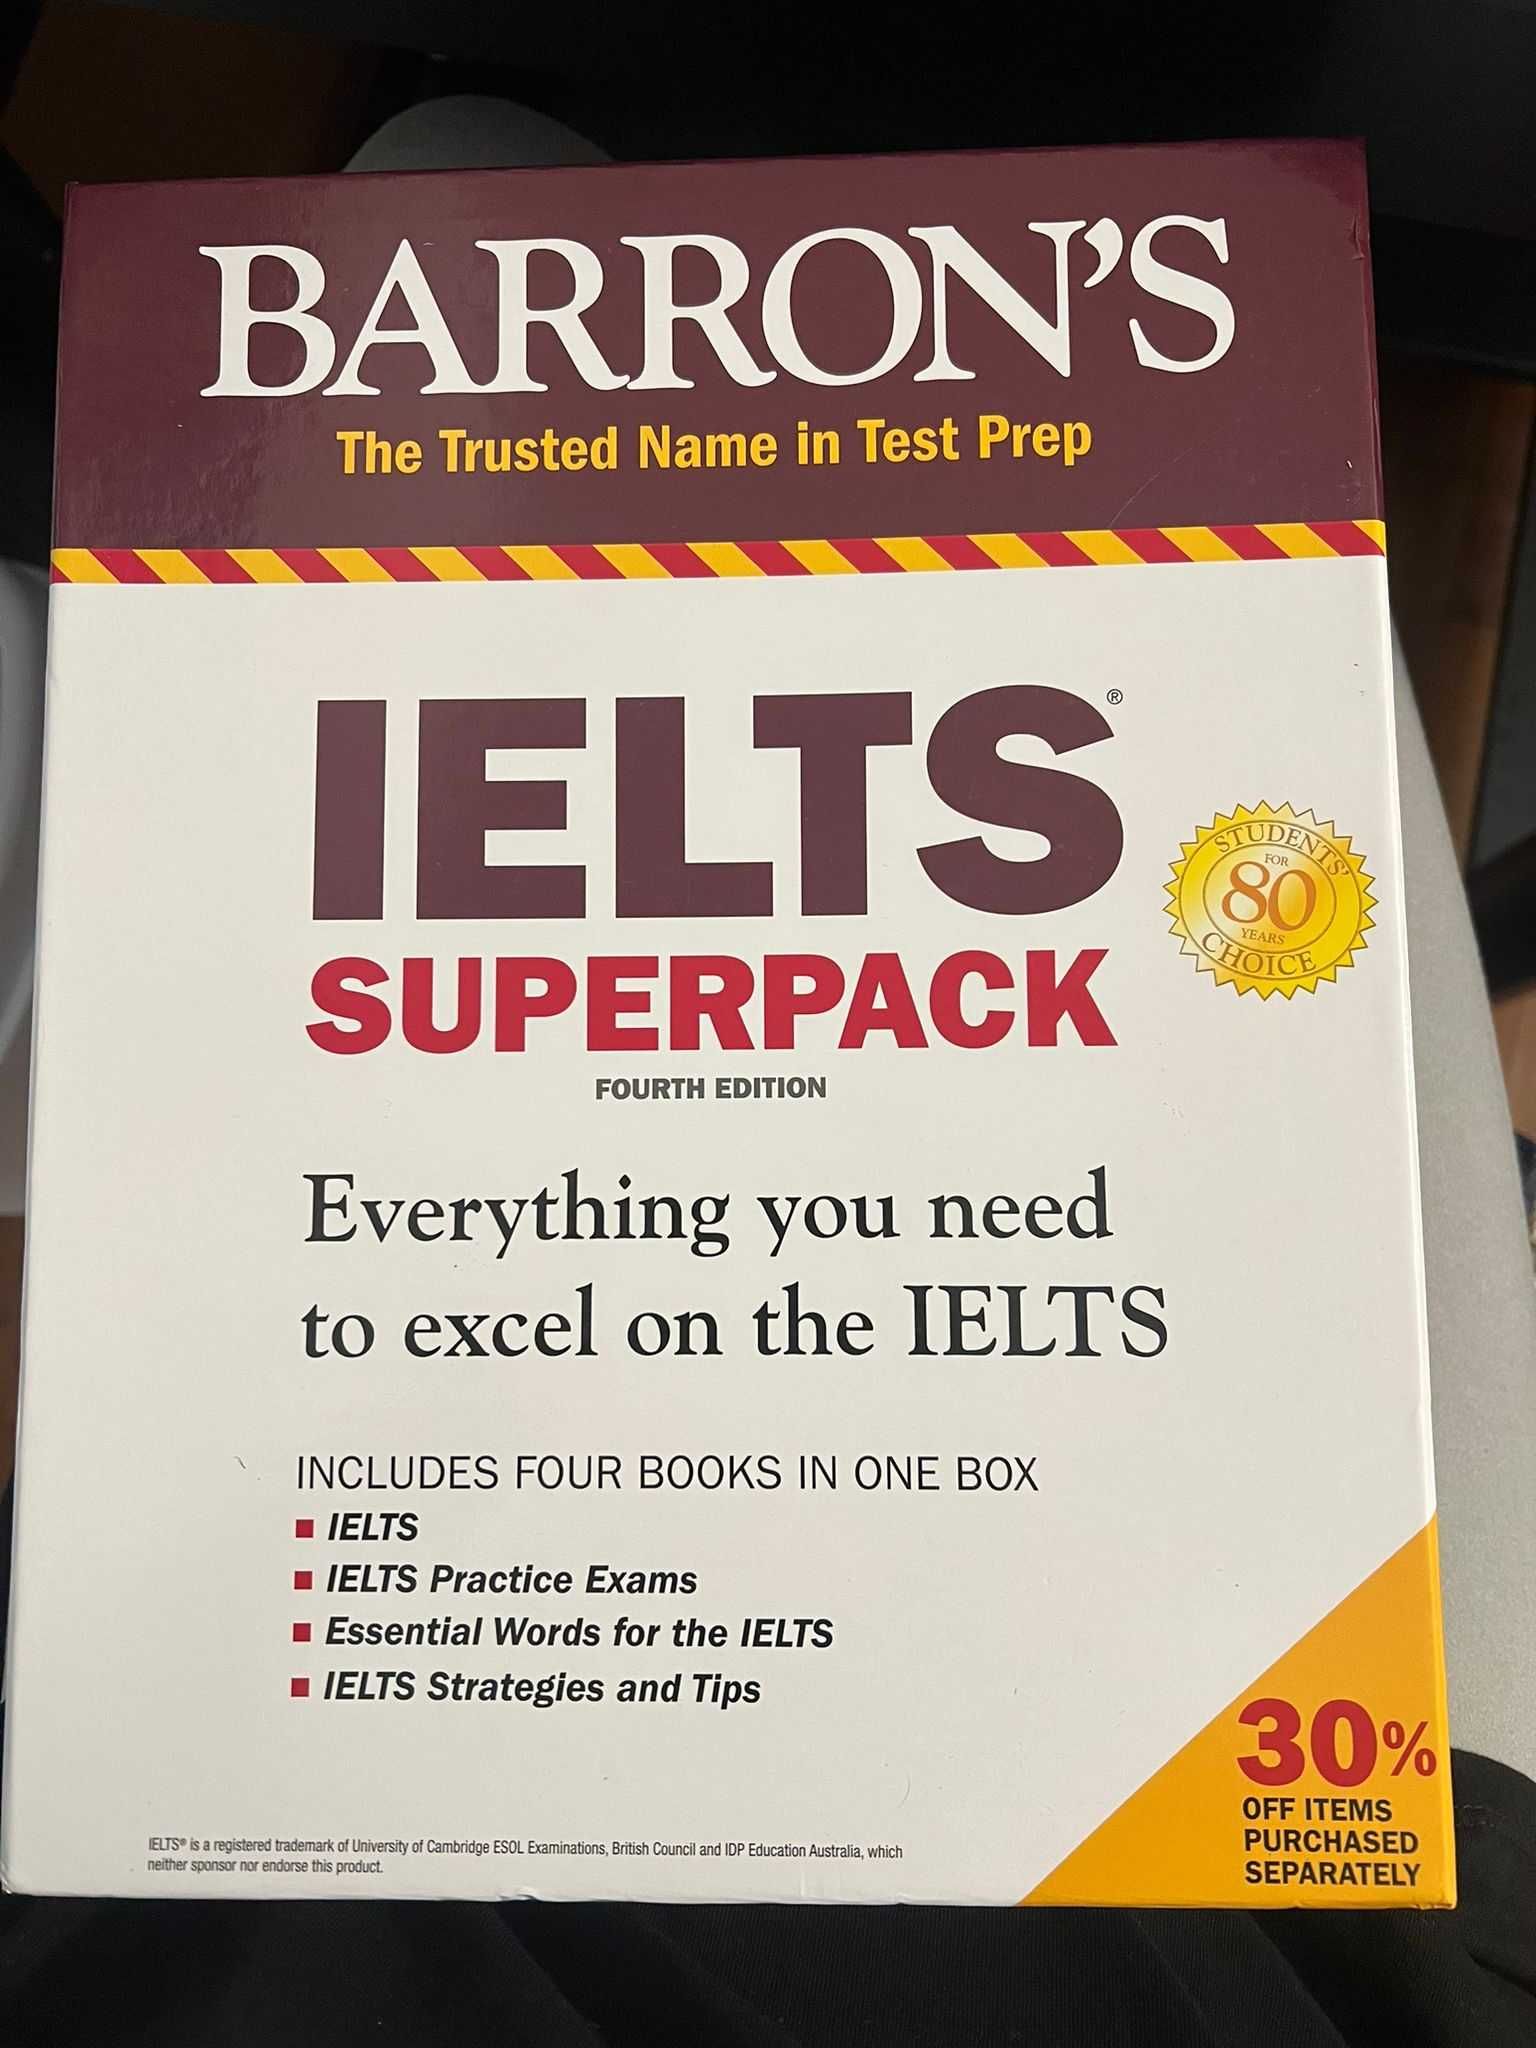 Barron's IELTS Superpack